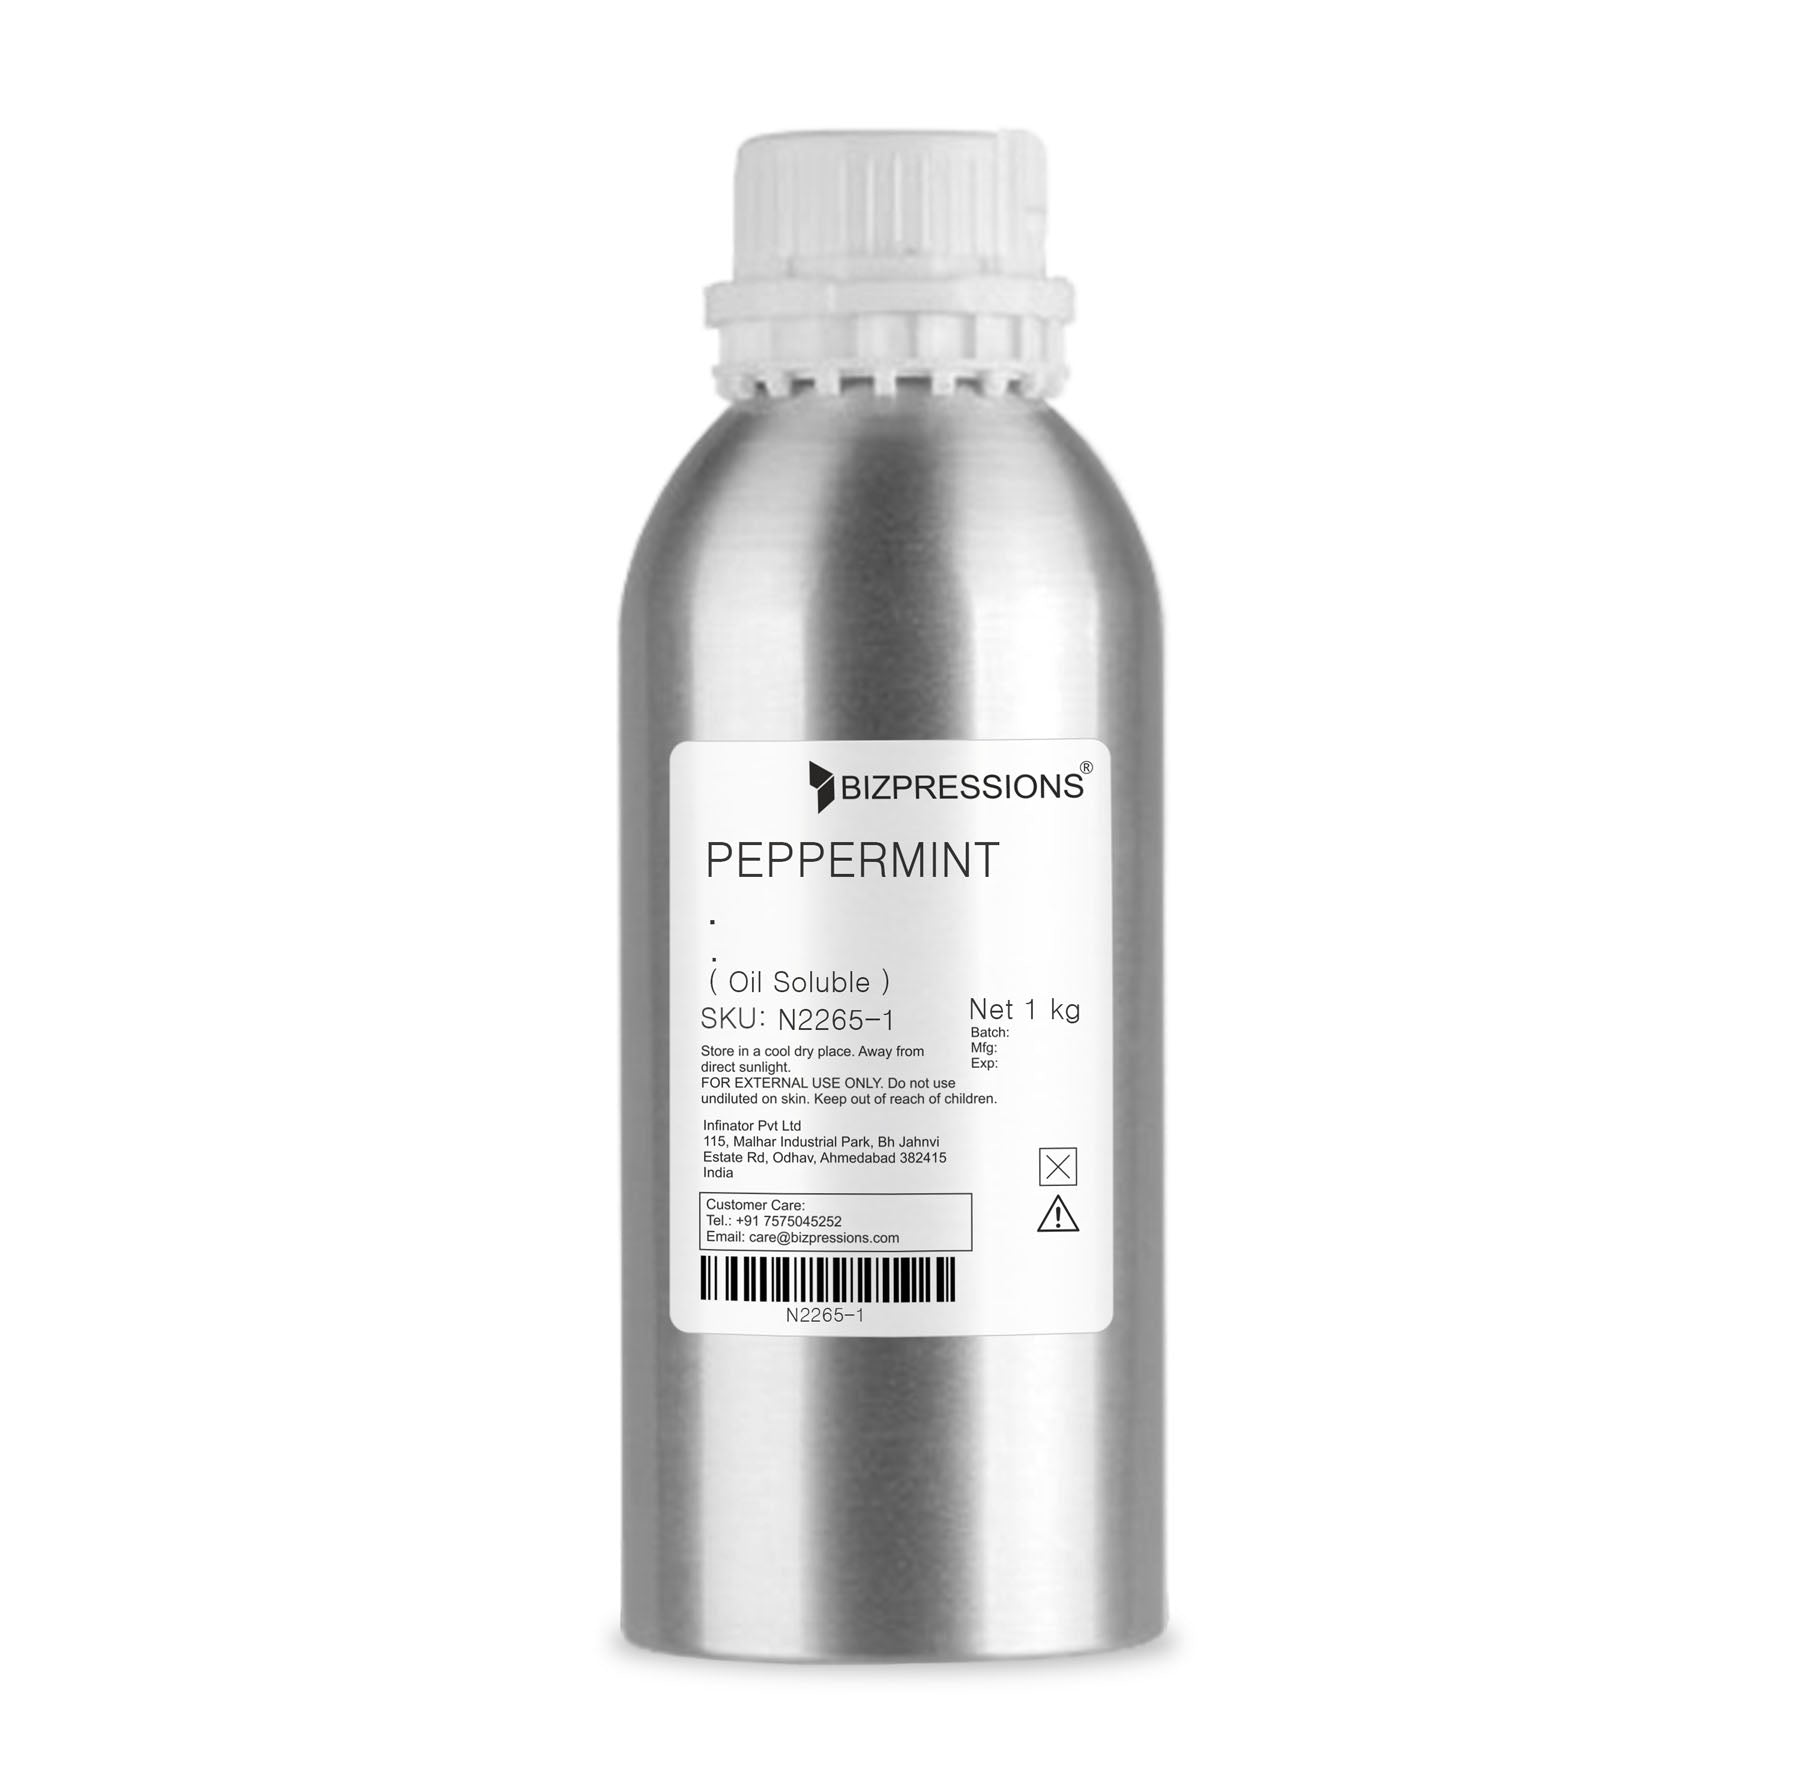 PEPPERMINT - Fragrance ( Oil Soluble ) - 1 kg